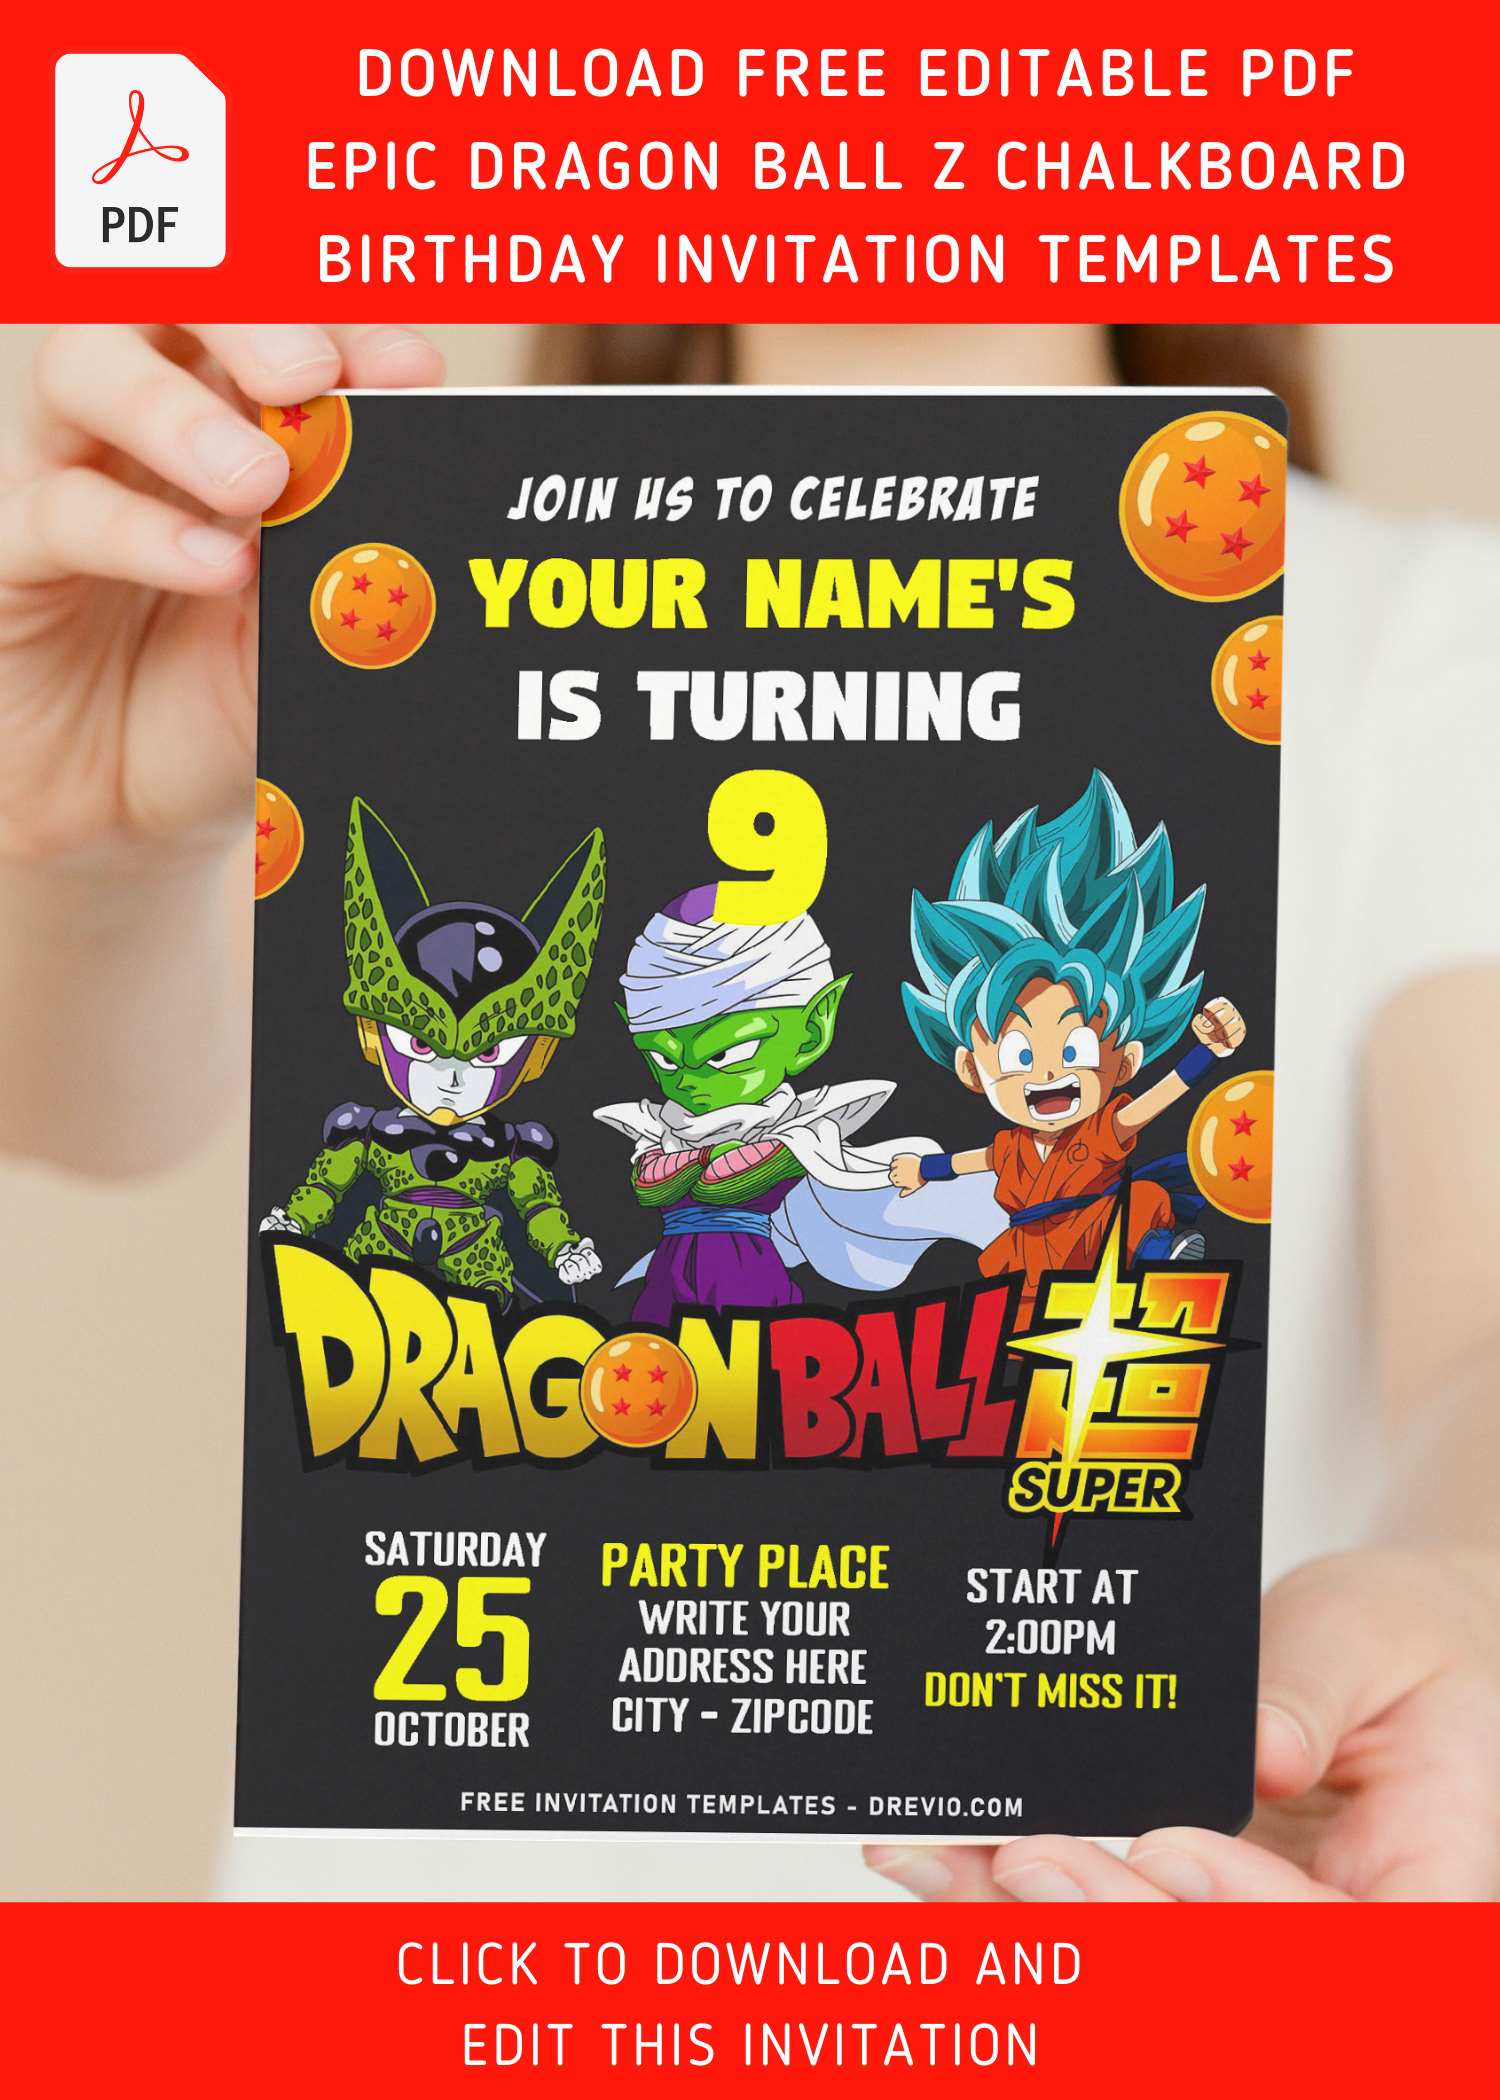 Free Editable PDF Colorful Dragon Ball Z Birthday Invitation